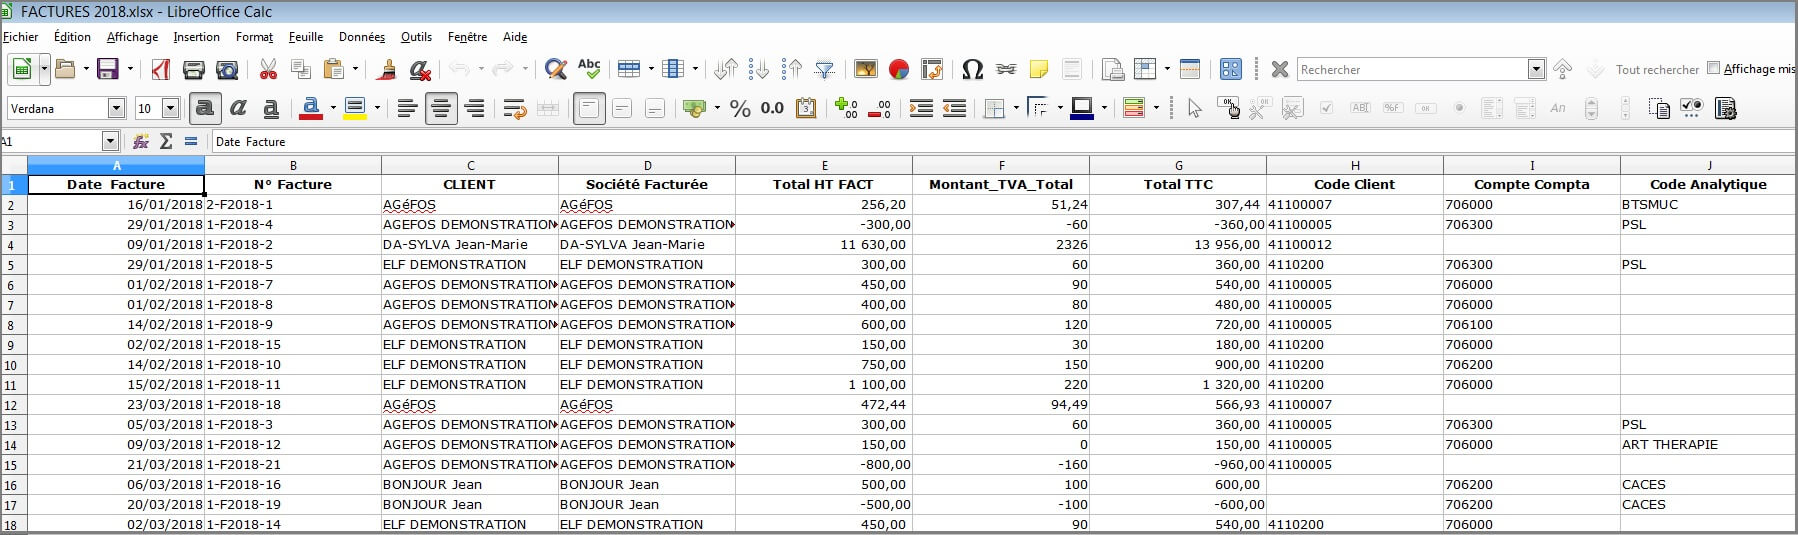 Factures - Fichier Excel